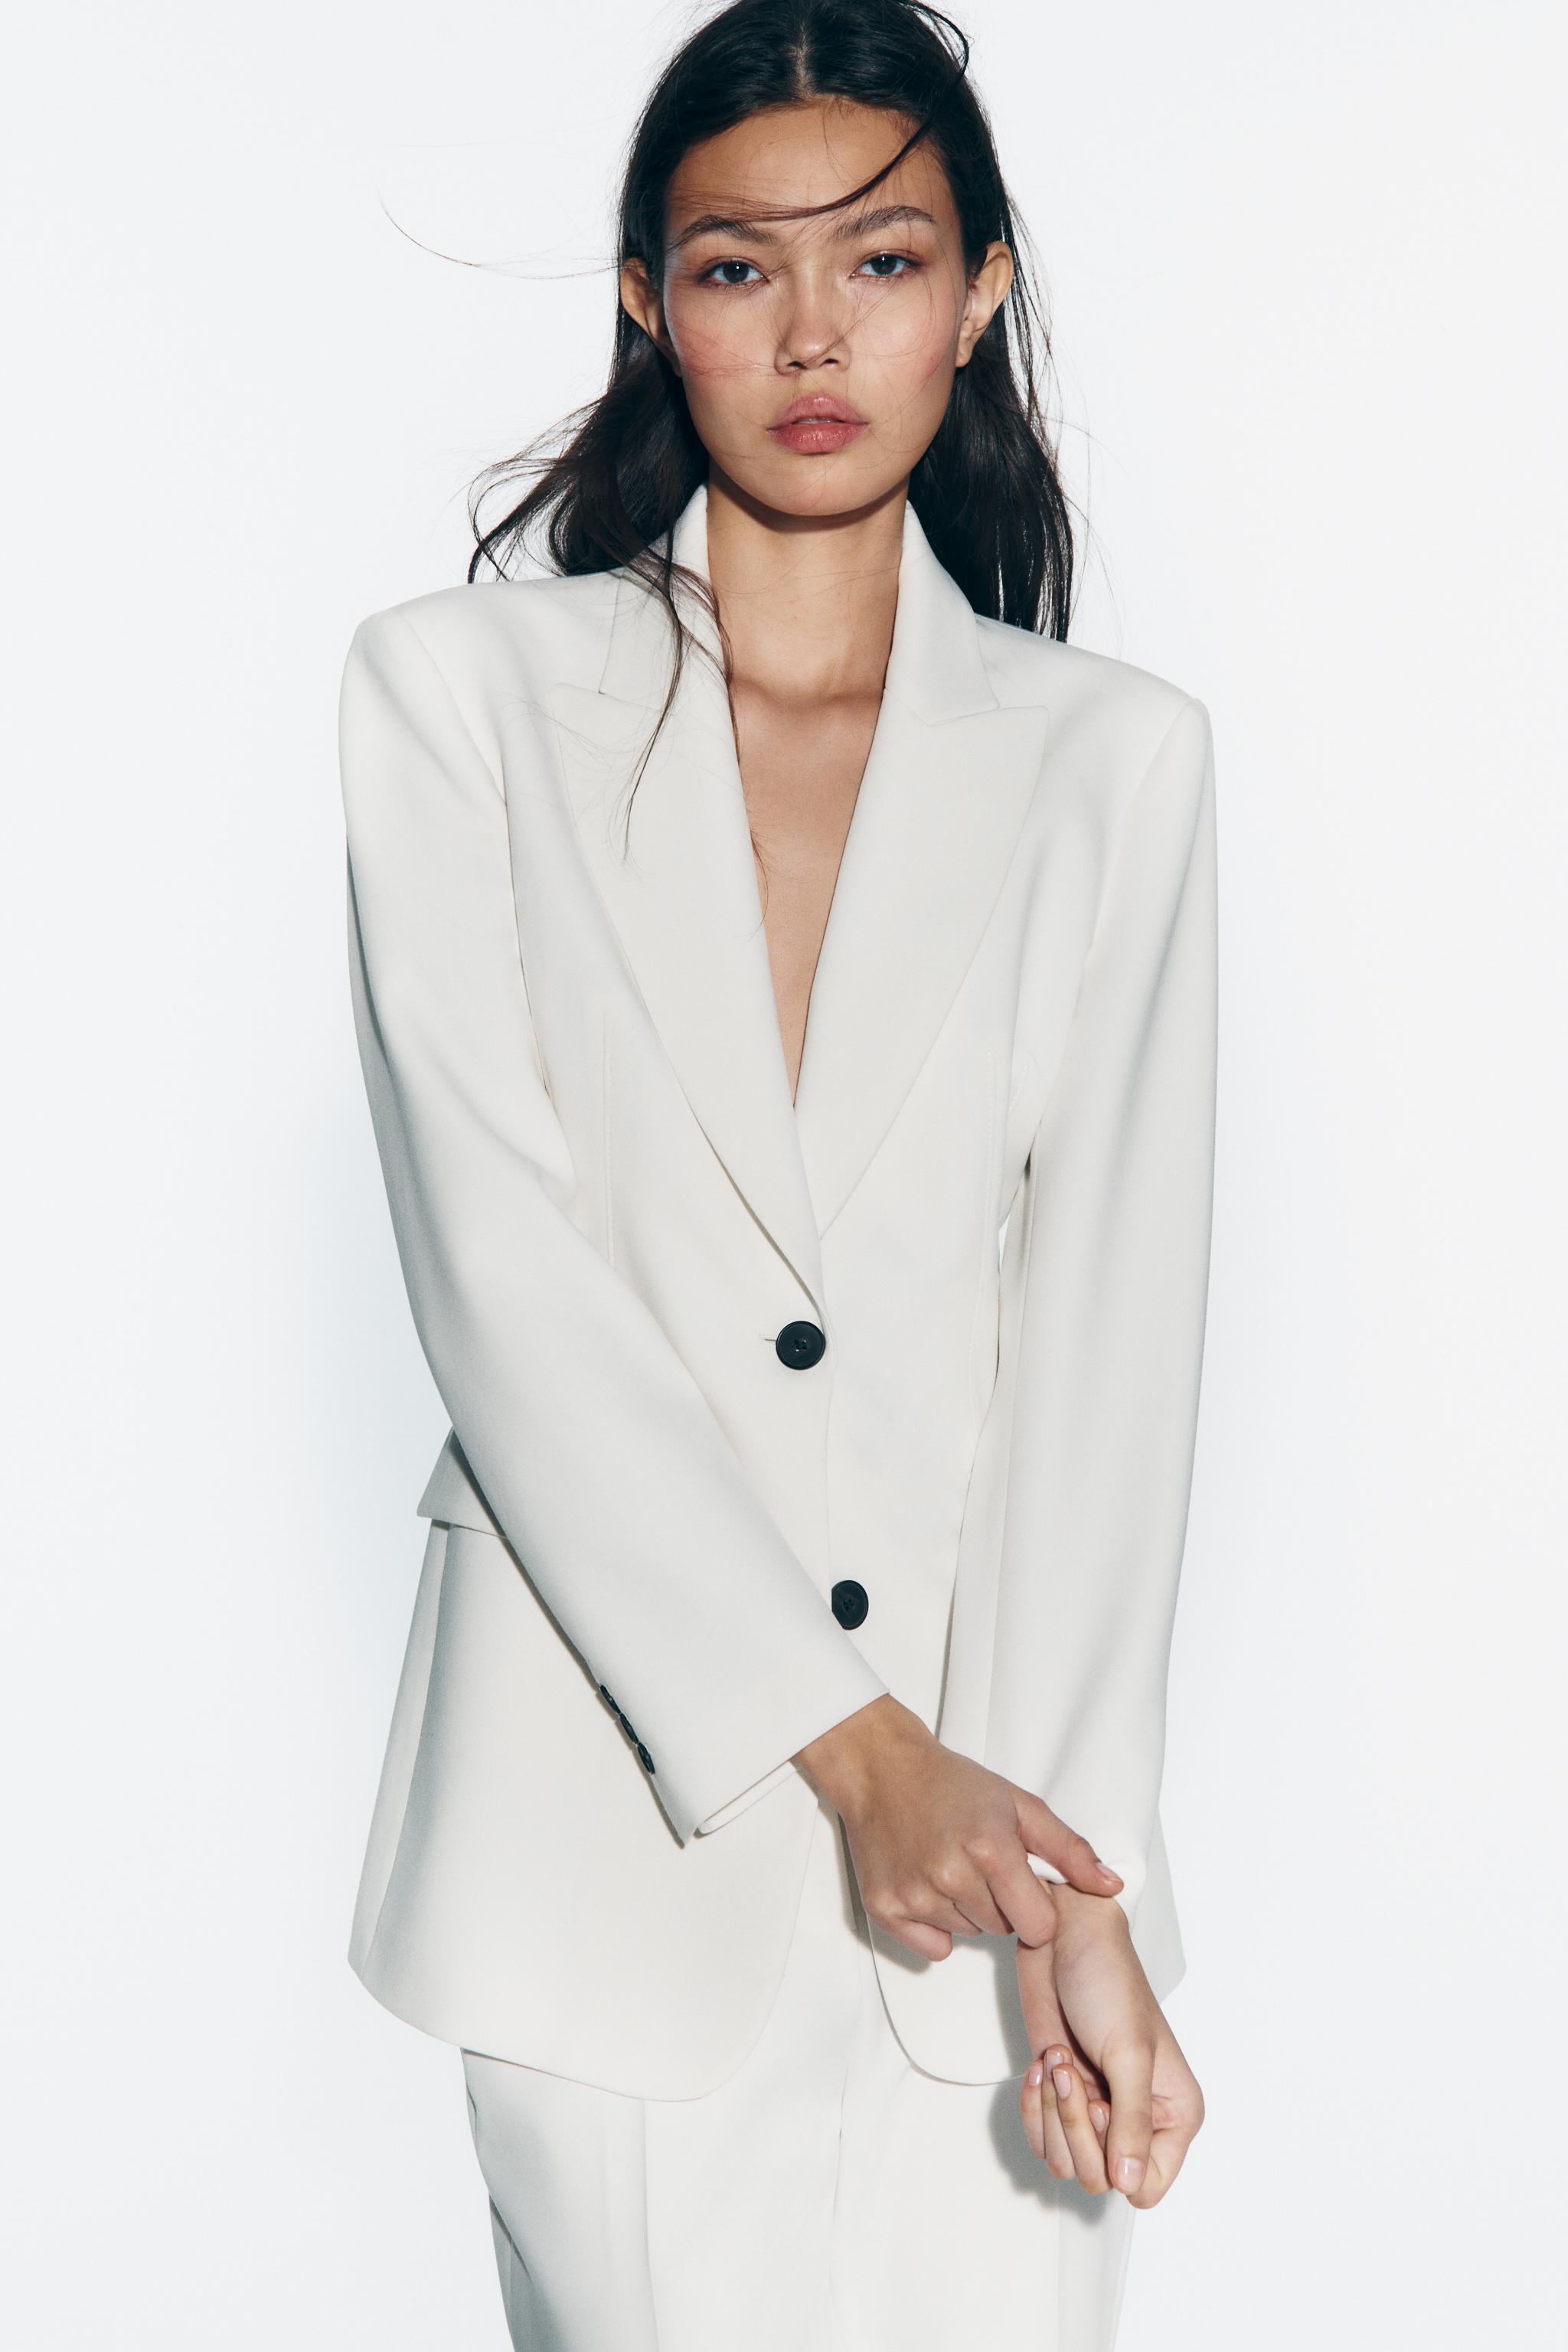 A Dress-and-Blazer Look: Zara Shoulder Pad Blazer and Asymmetrical